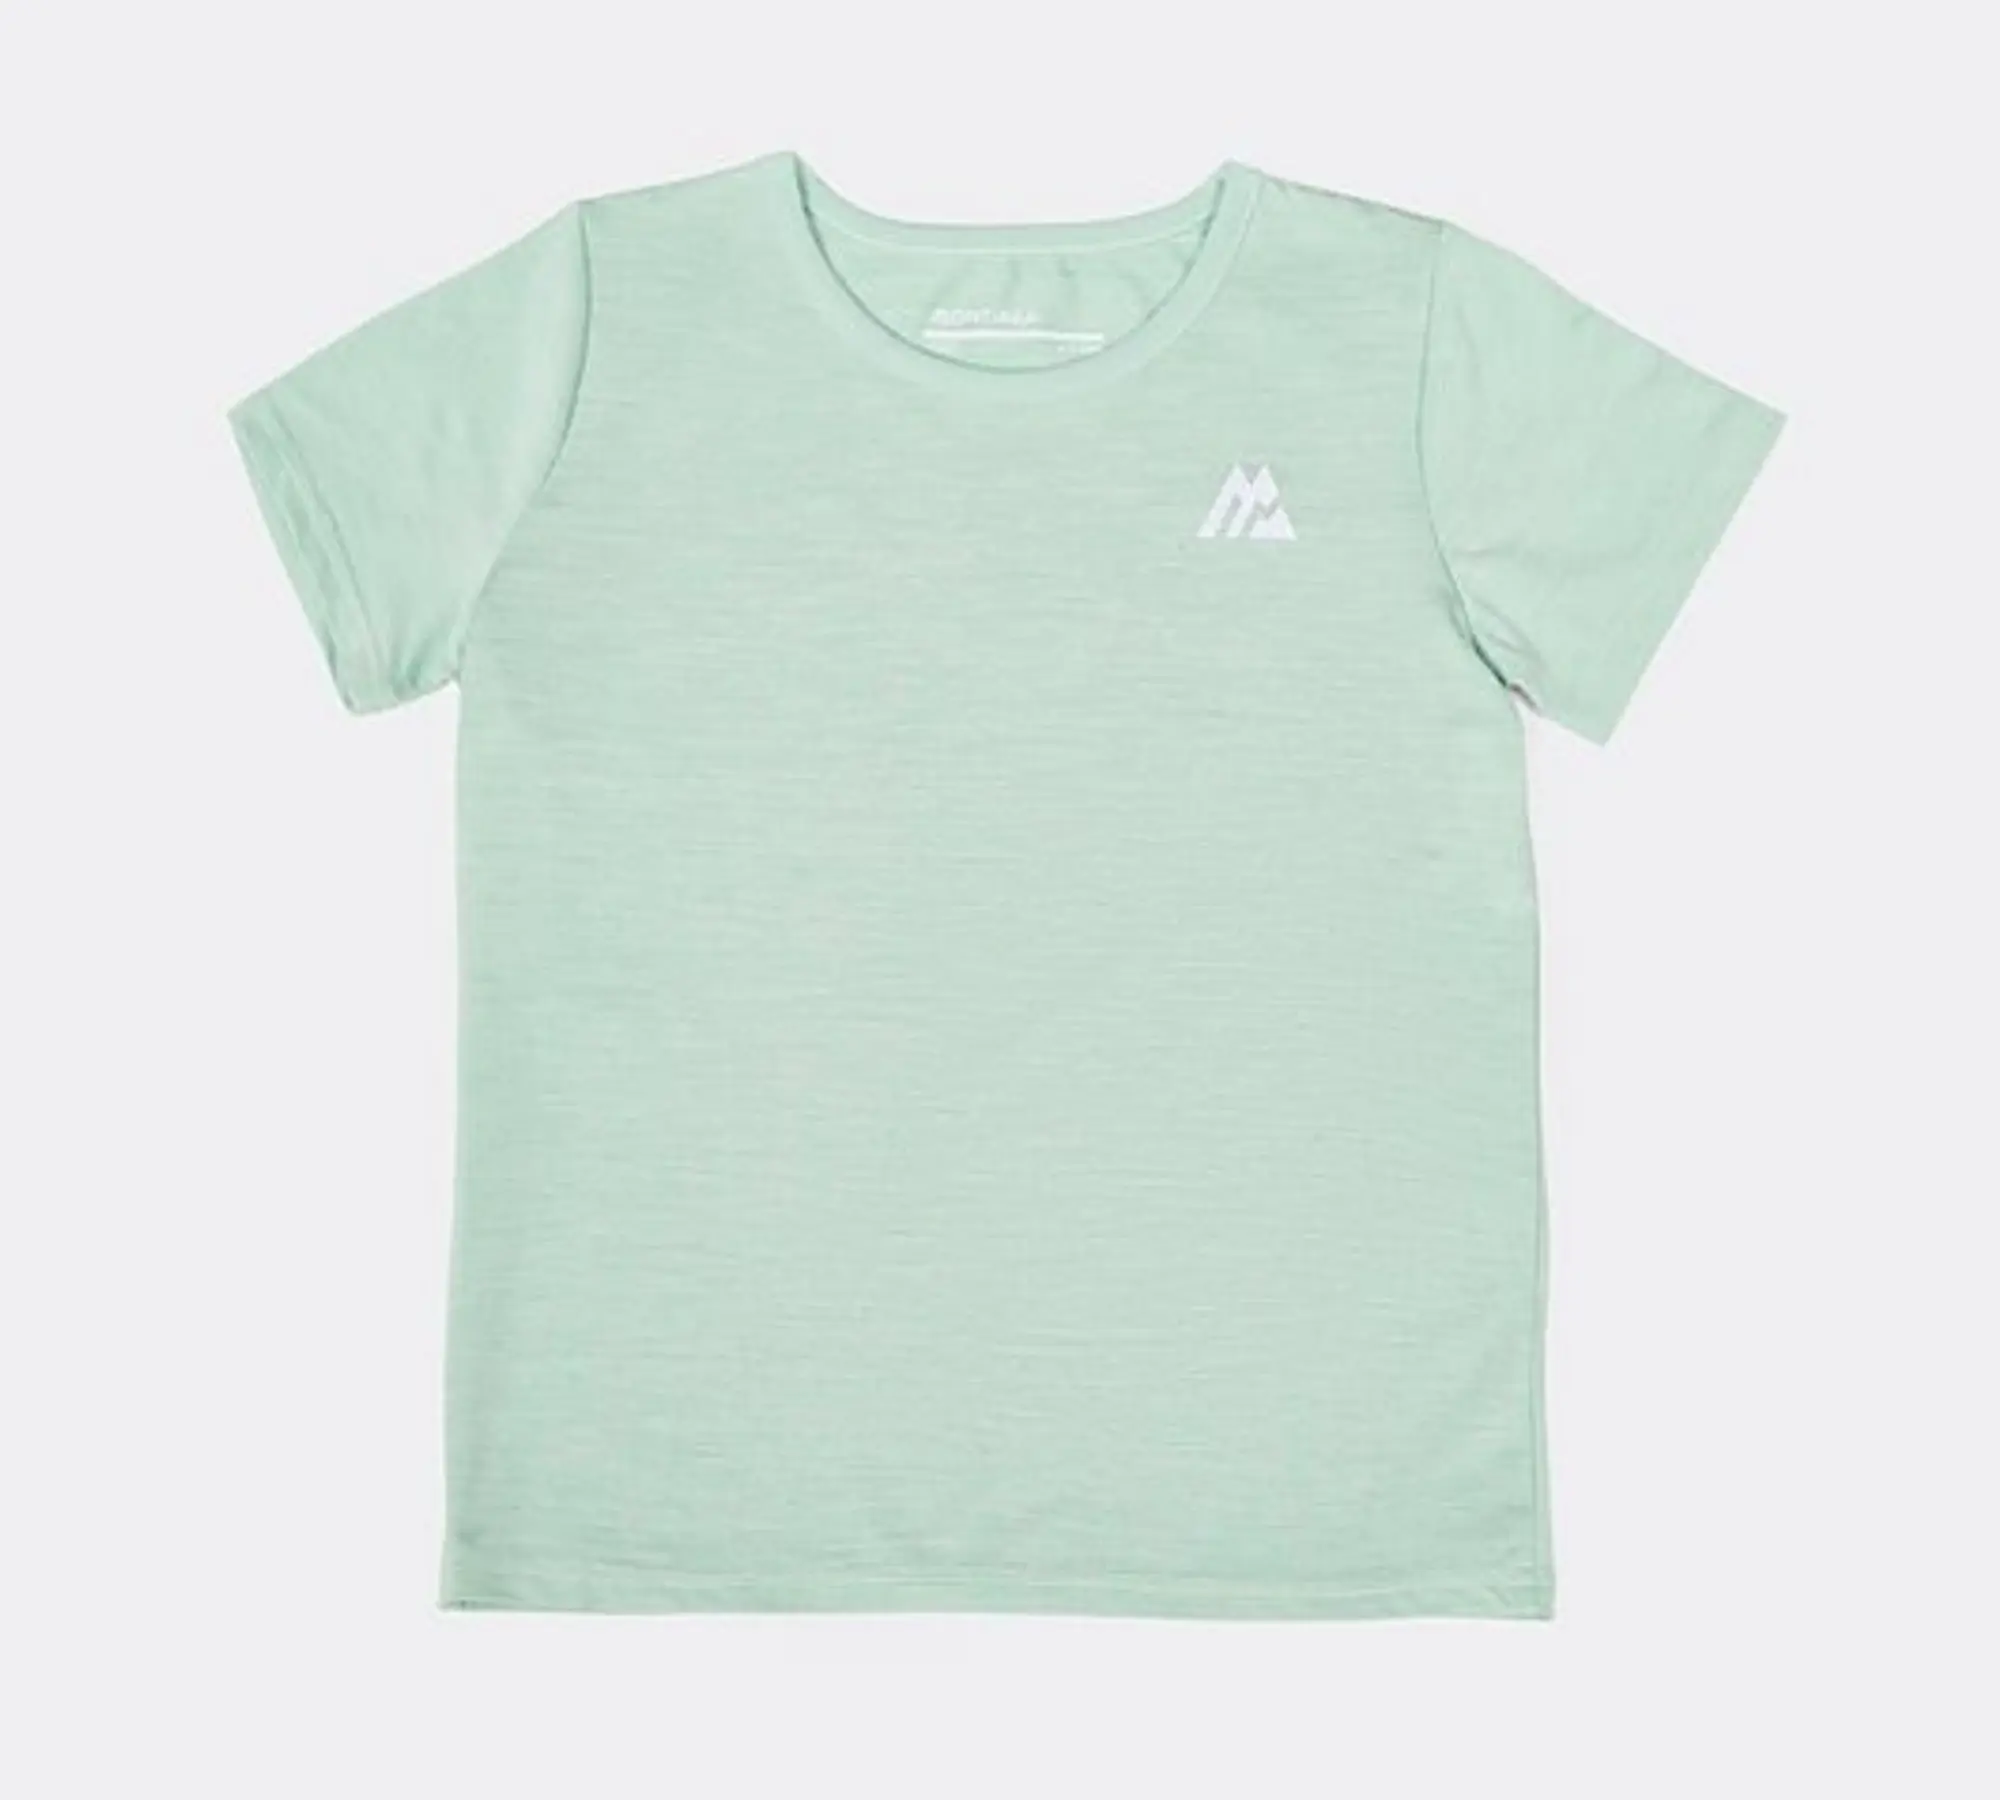 Montirex Nursery Agility Poly T-Shirt and Short Set - Celeste Green / Platinum Grey